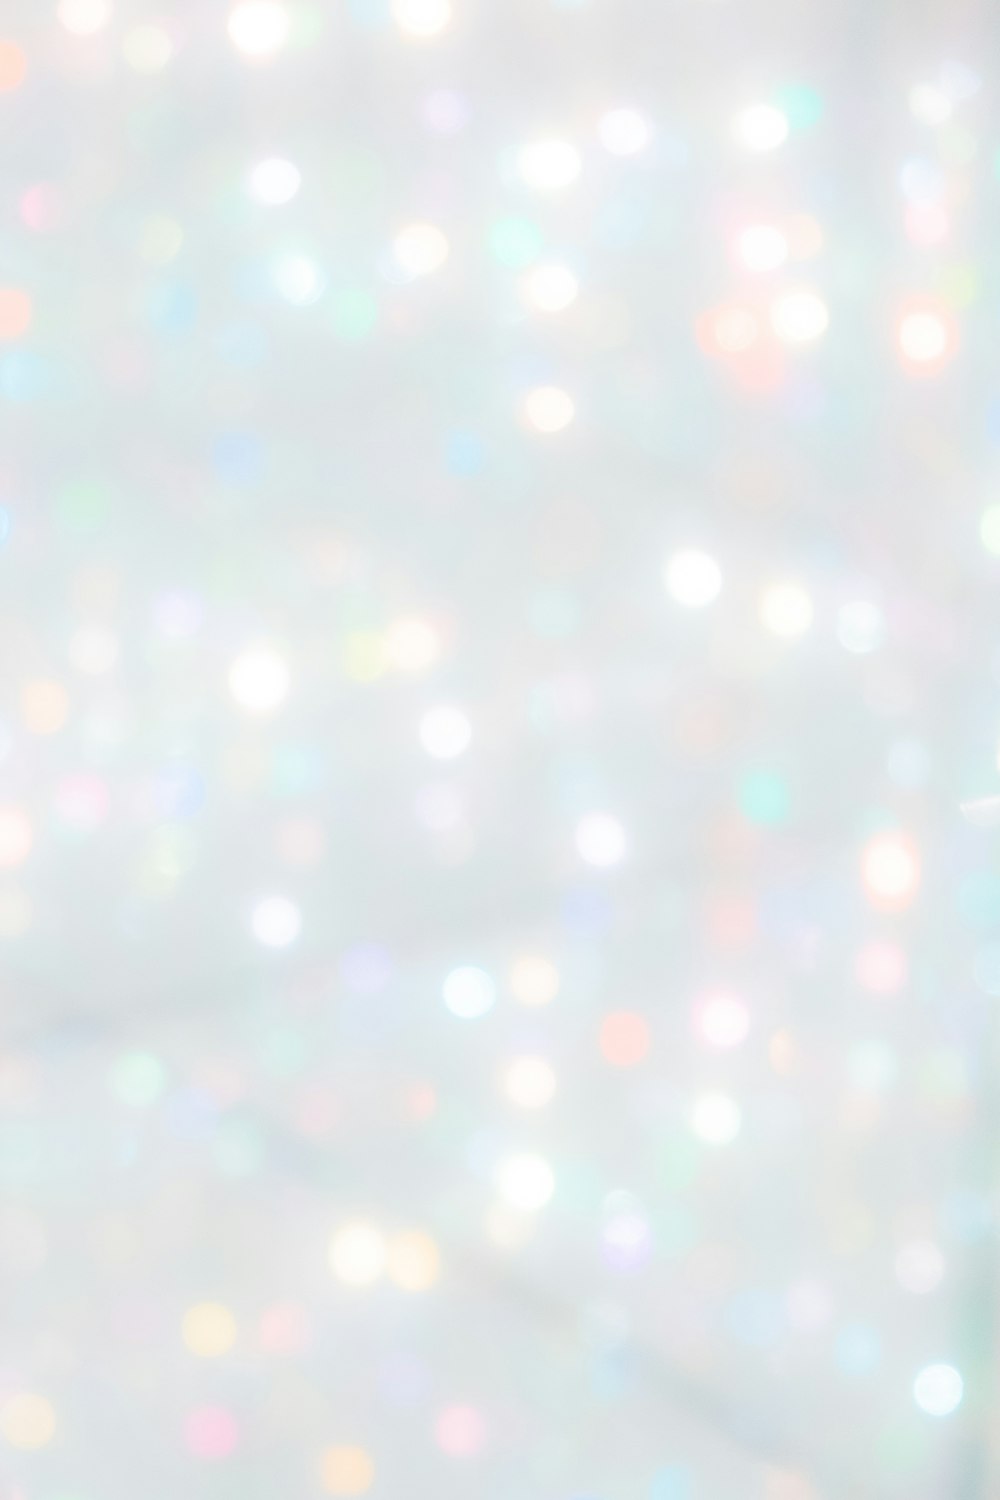 285,630 White Glitter Background Stock Photos - Free & Royalty